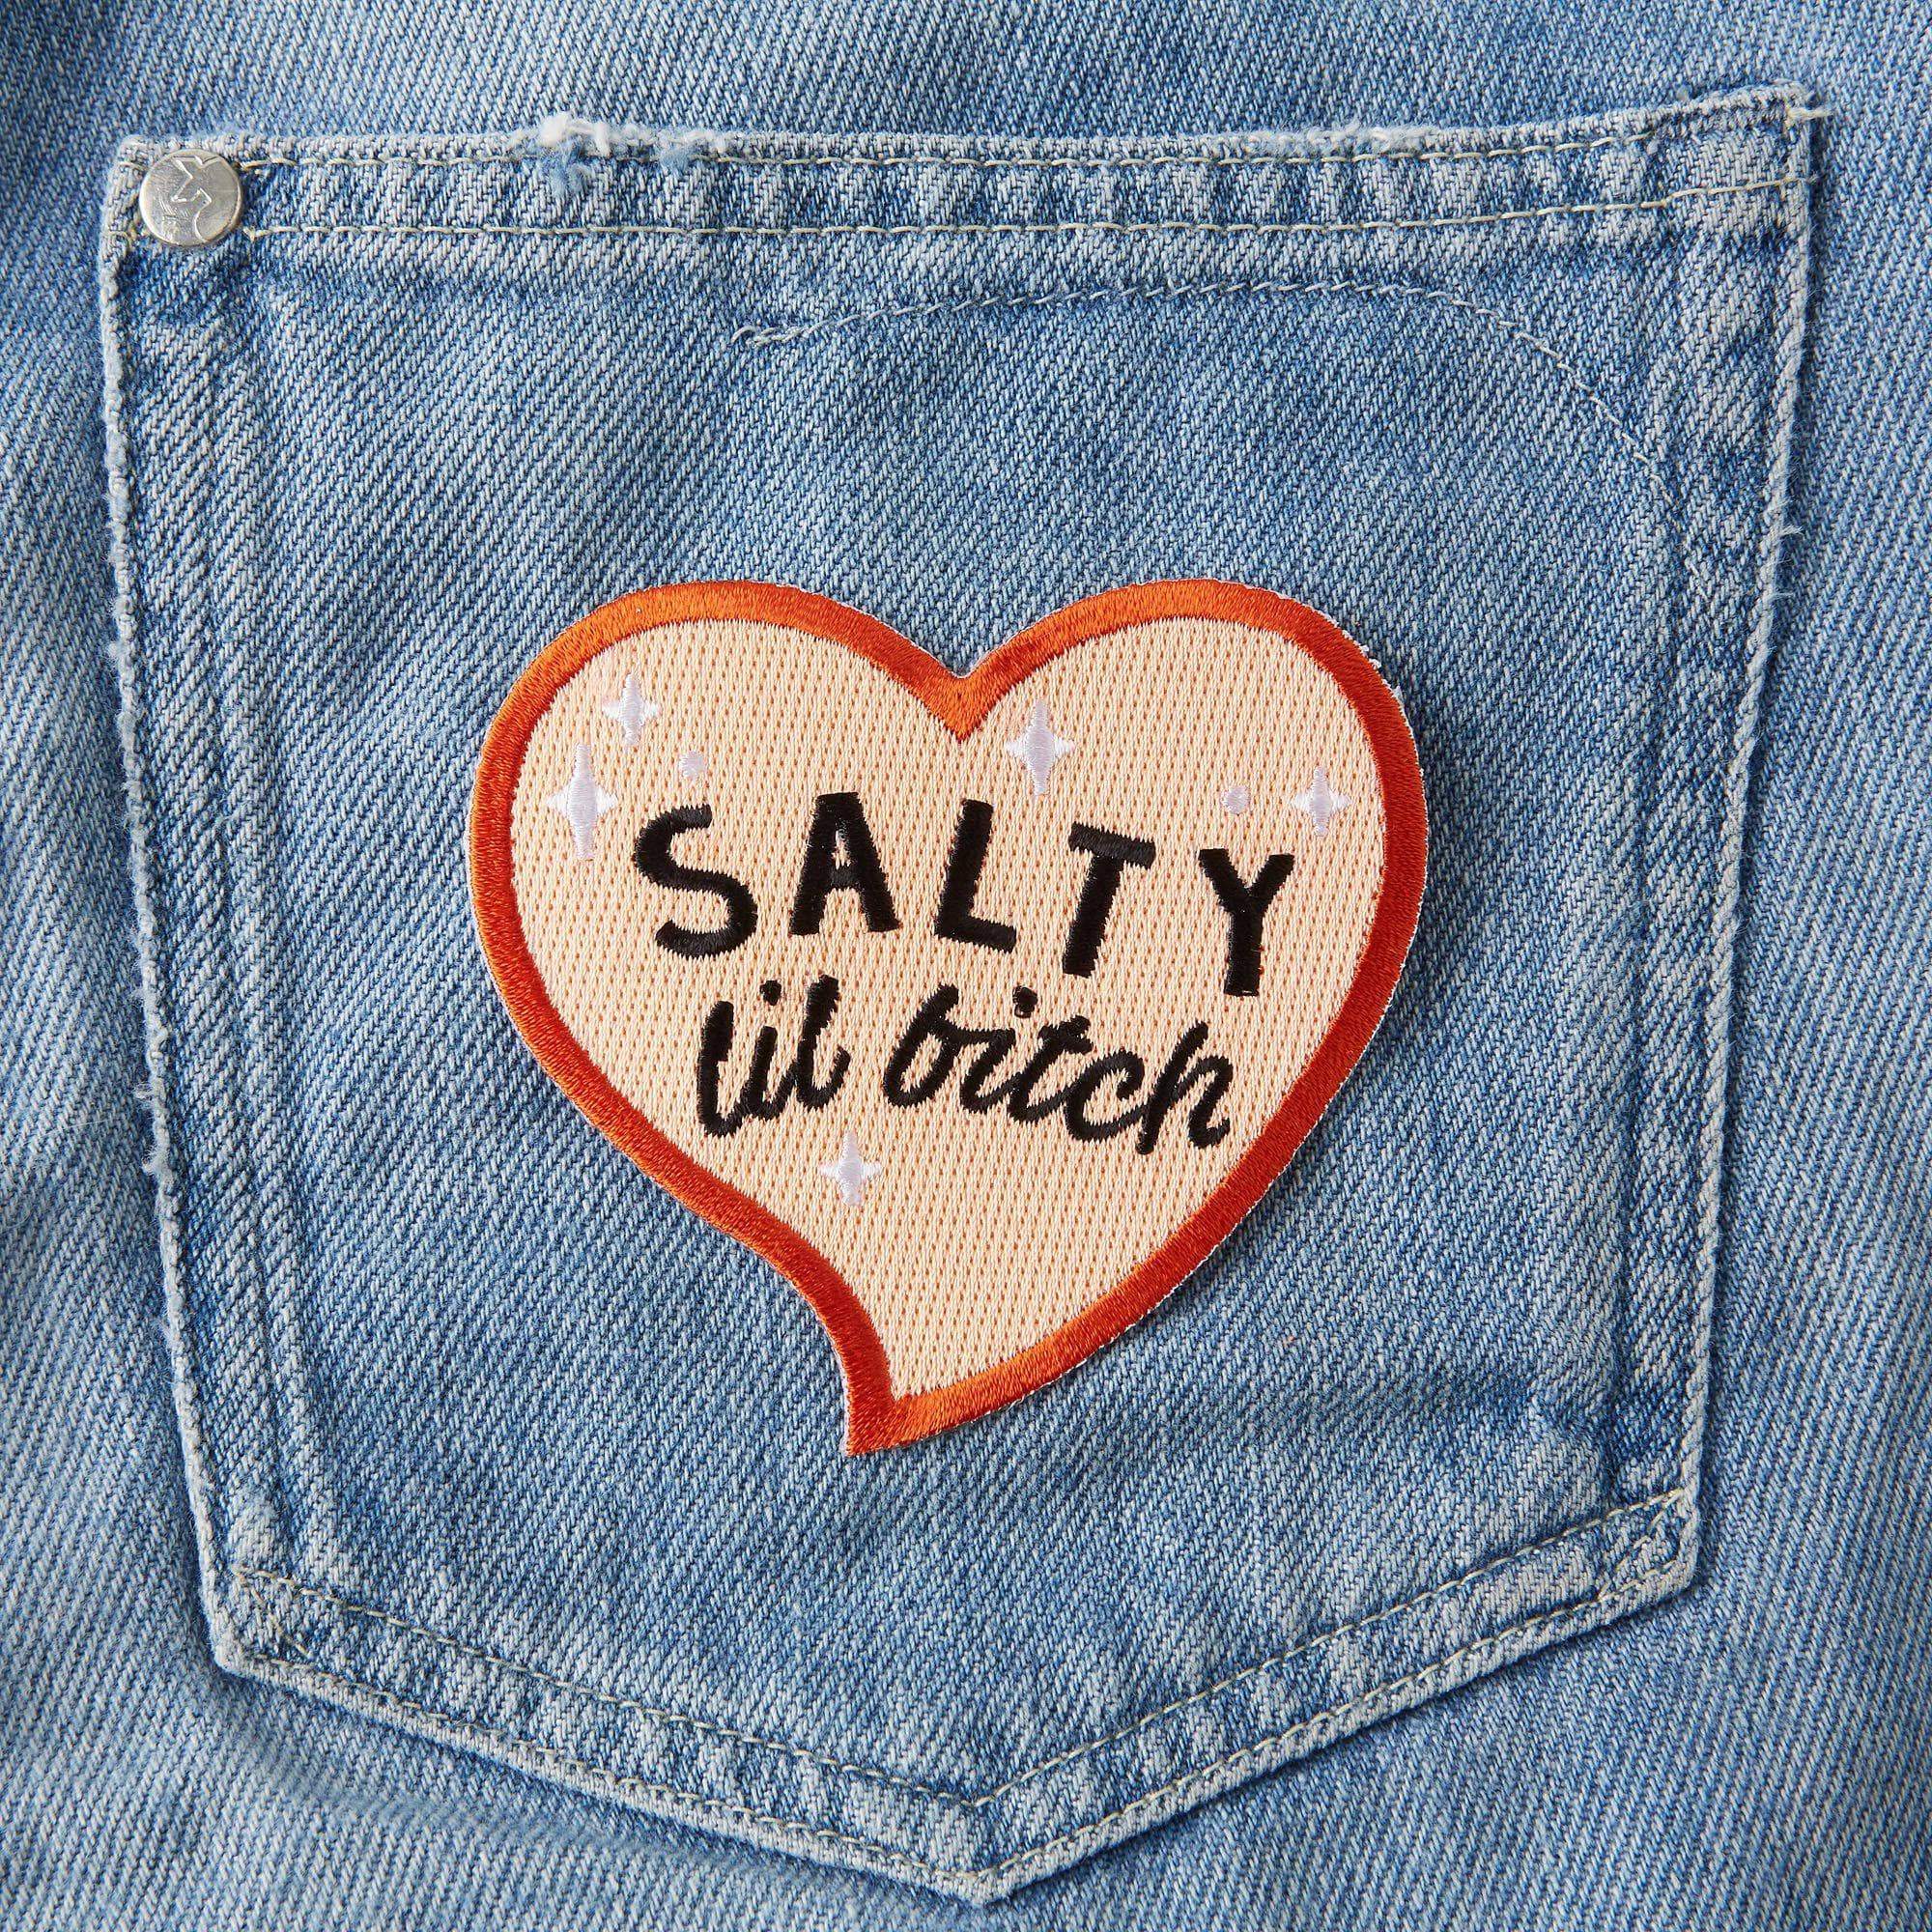 Salty Lil Bitch Heart Patch - Birch Hill Studio